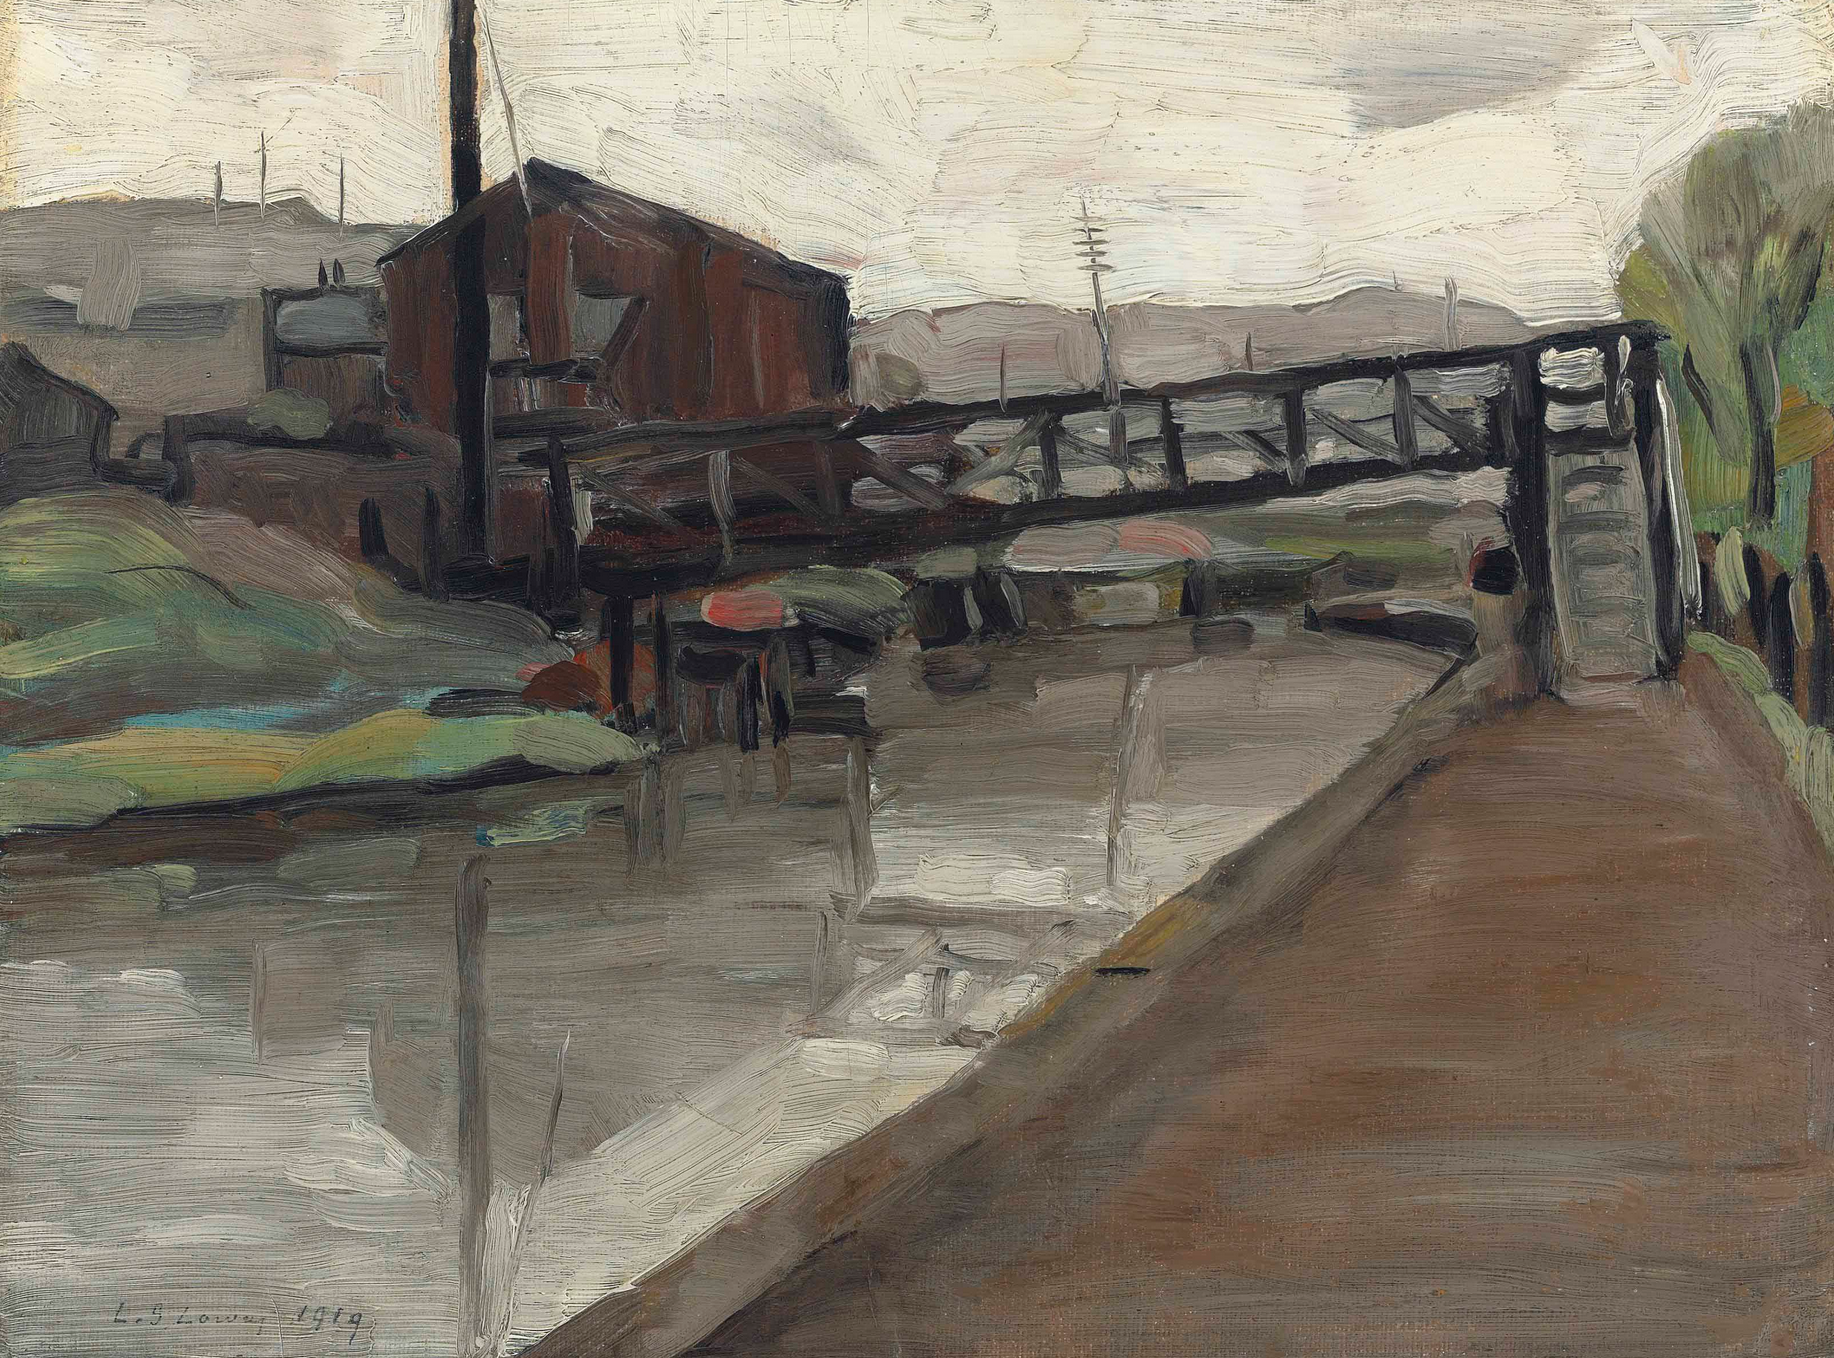 Pendlebury Bridge (1919) by Laurence Stephen Lowry (1887 - 1976), English artist.